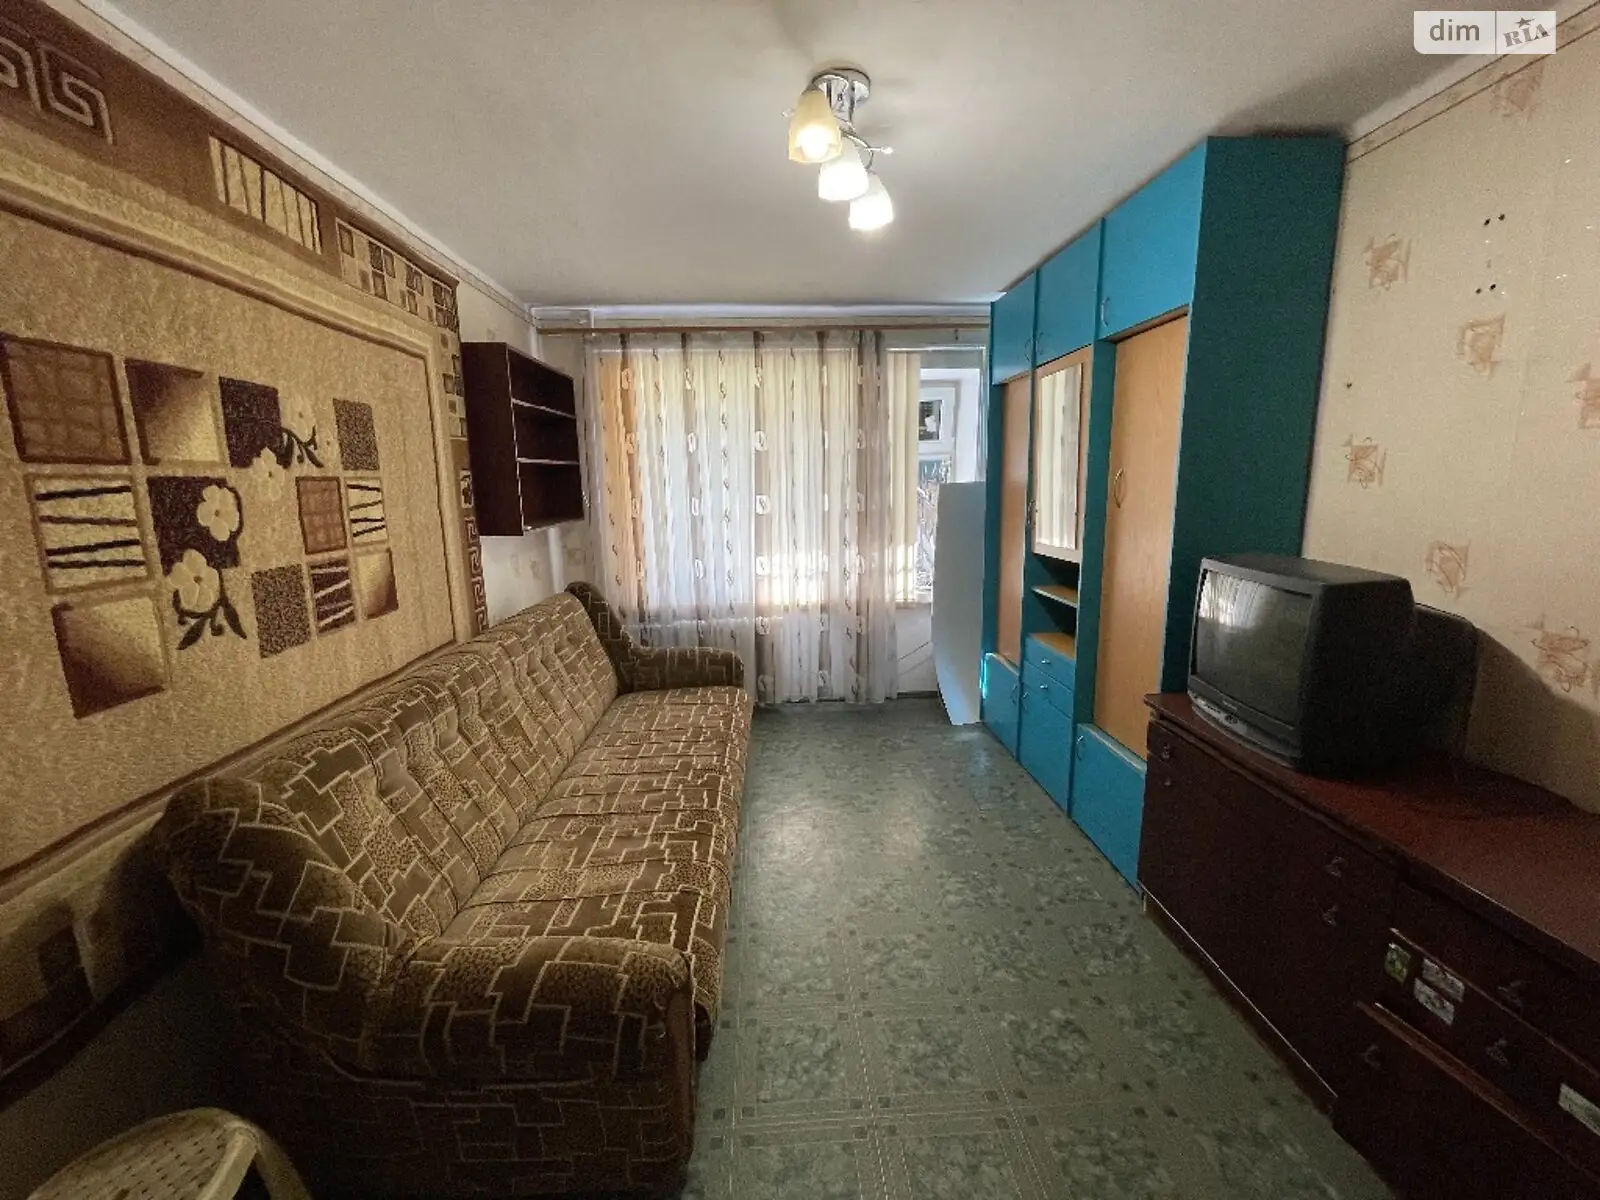 Продается комната 17 кв. м в Одессе, цена: 10000 $ - фото 1